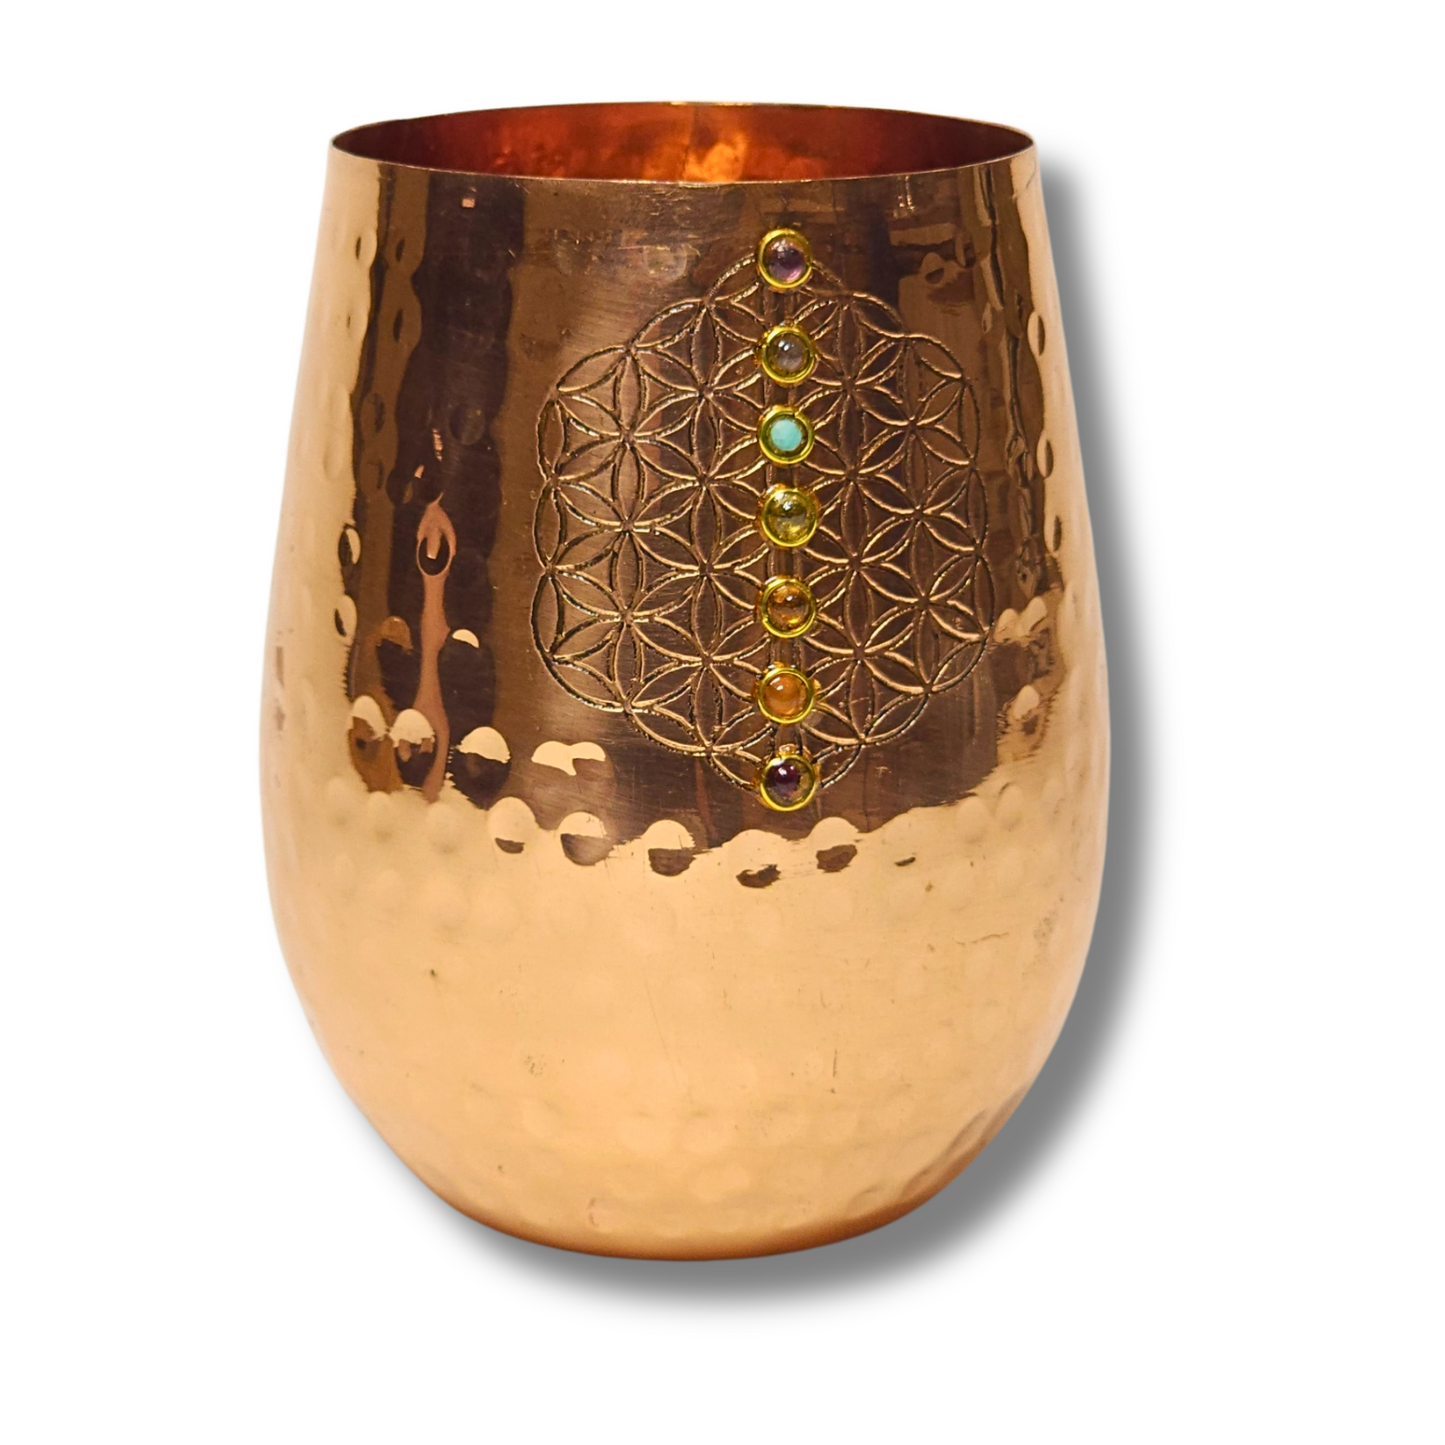 Cosmic Harmony Copper Glass: 7 Chakra Gemstones